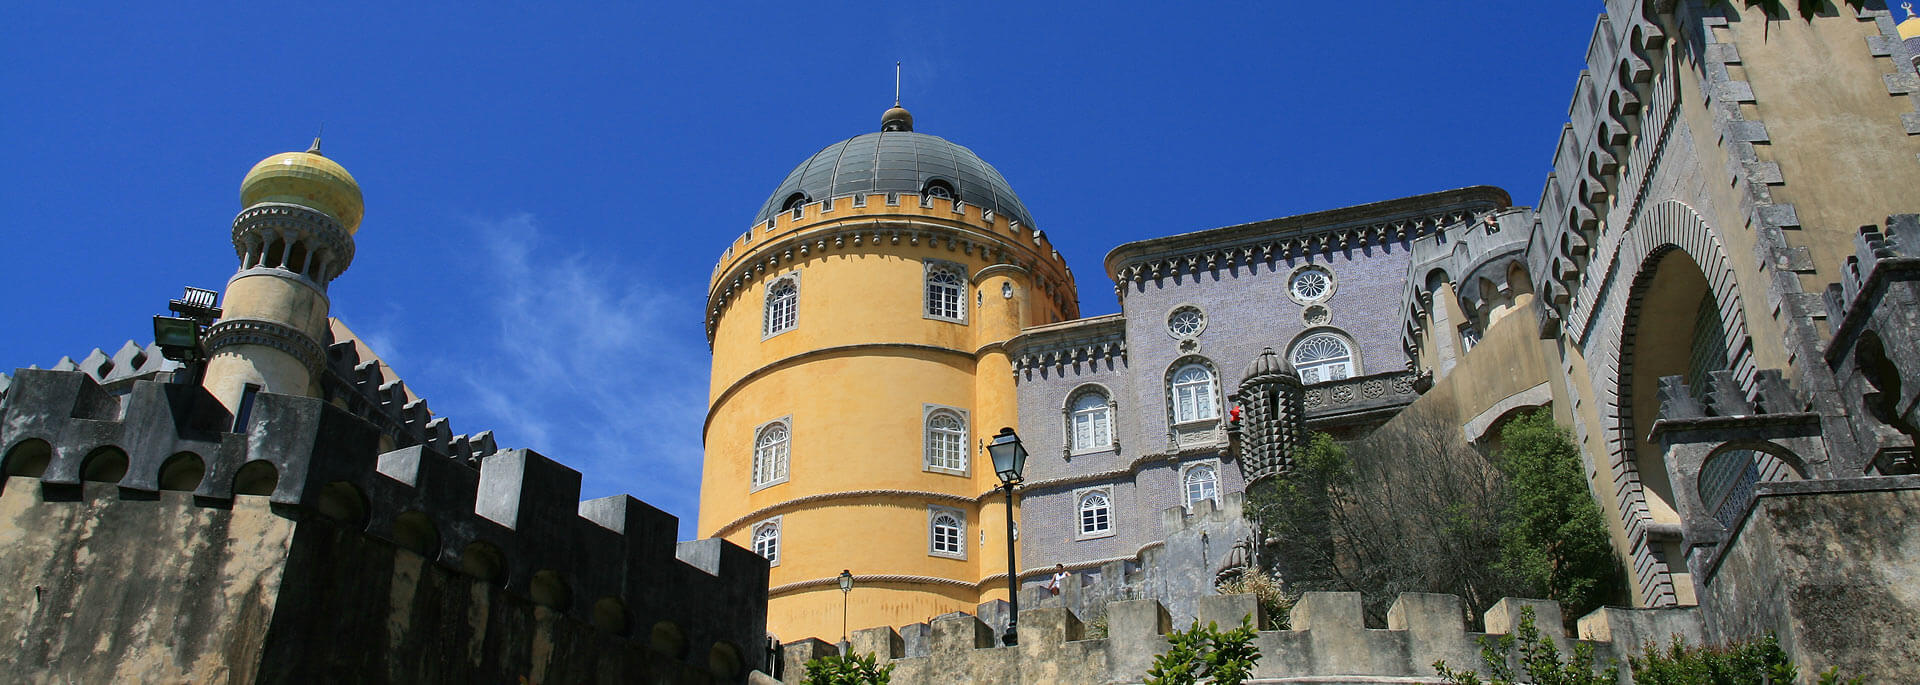 Ausflug zum Palacio da Pena in Sintra